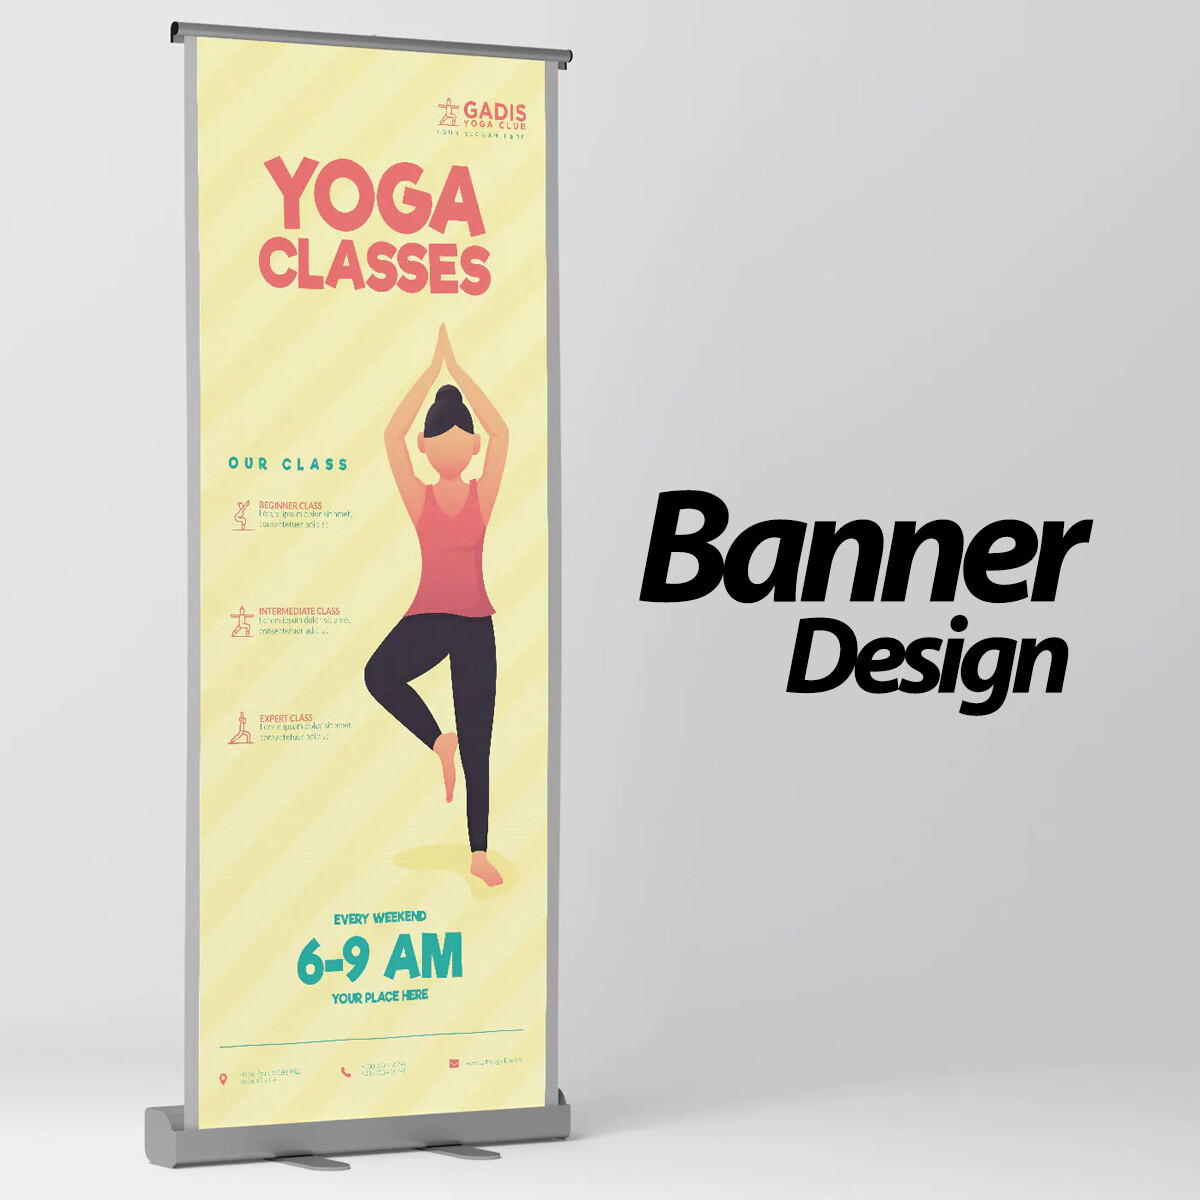 Banner Design